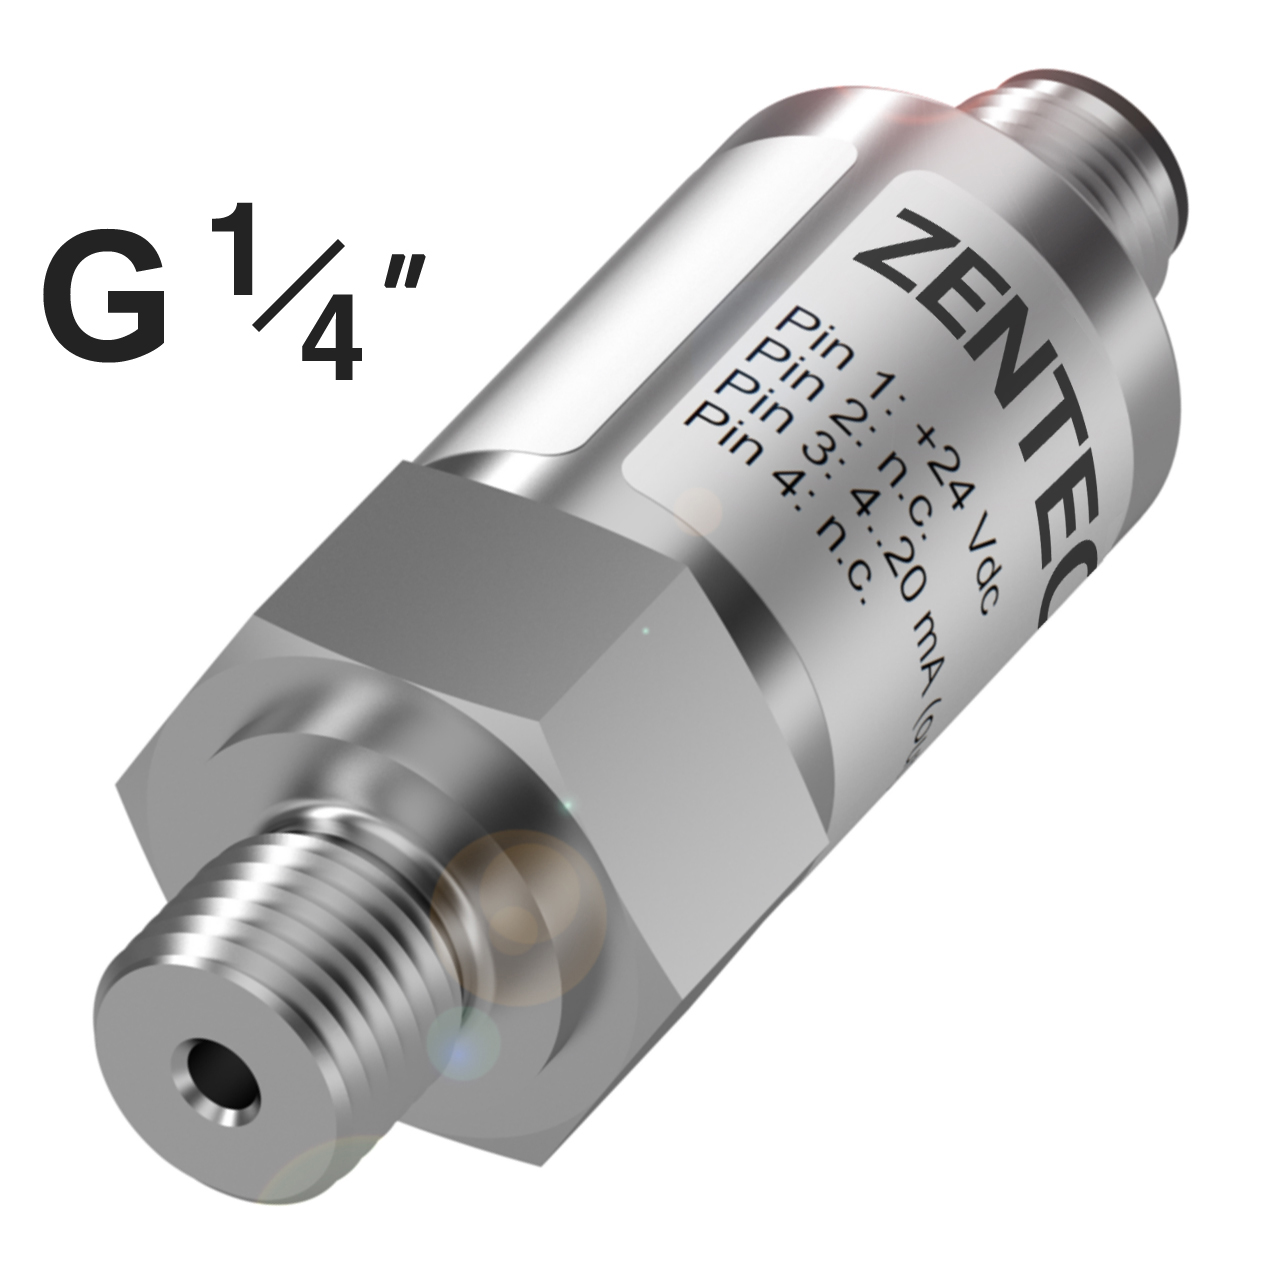 pressure transmitter g14 size